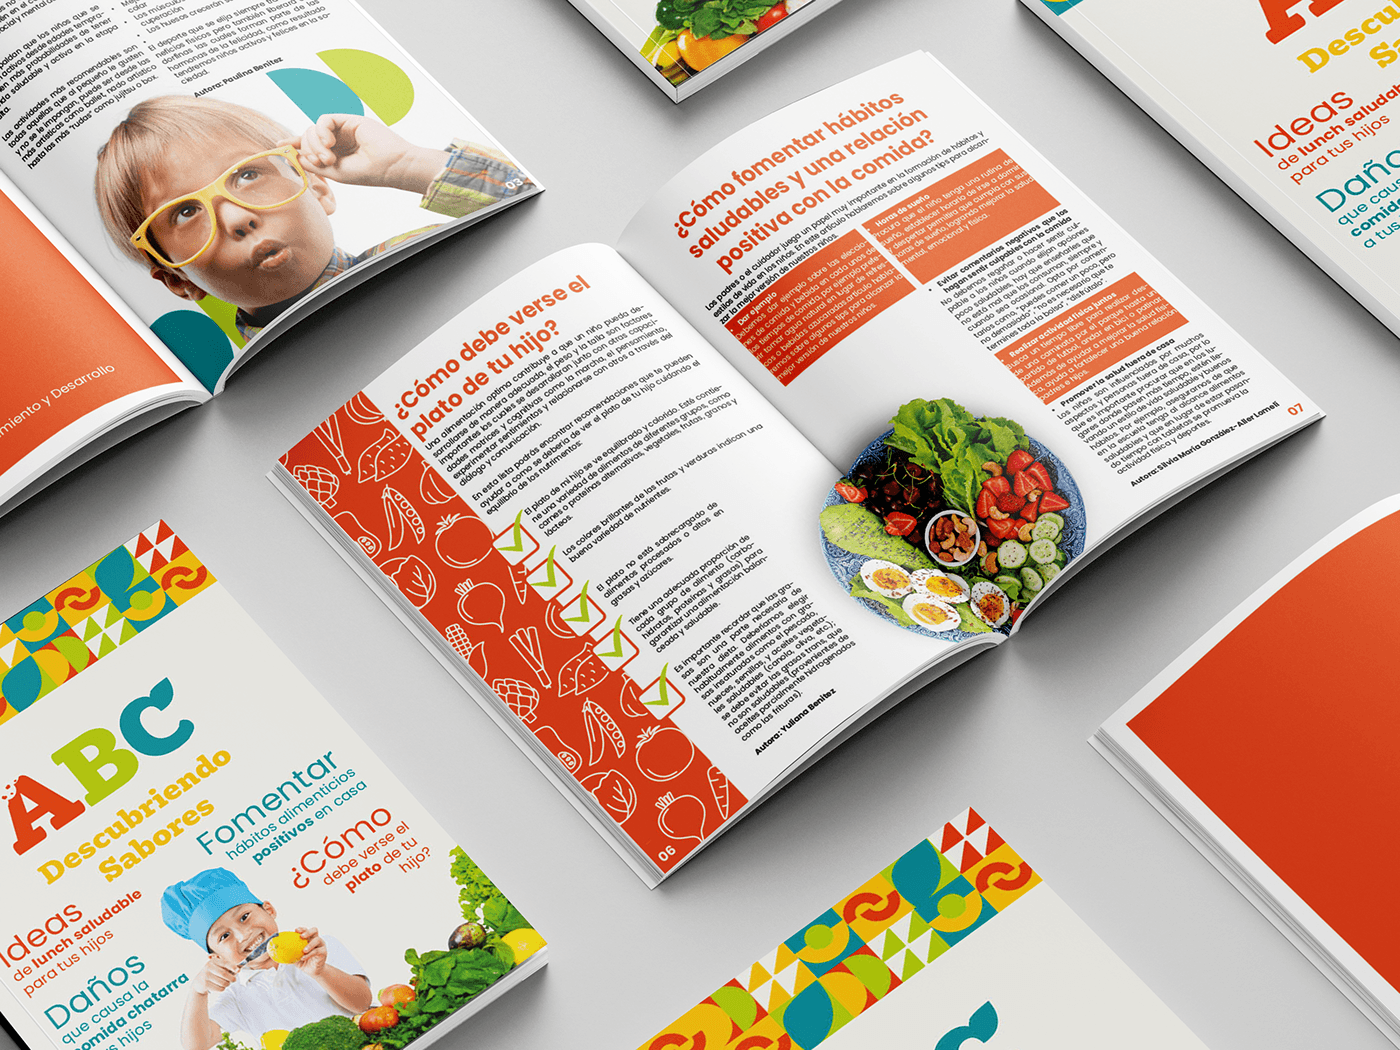 Adobe InDesign adobe illustrator Adobe Photoshop Graphic Designer Brand Design magazine nutrition Food 